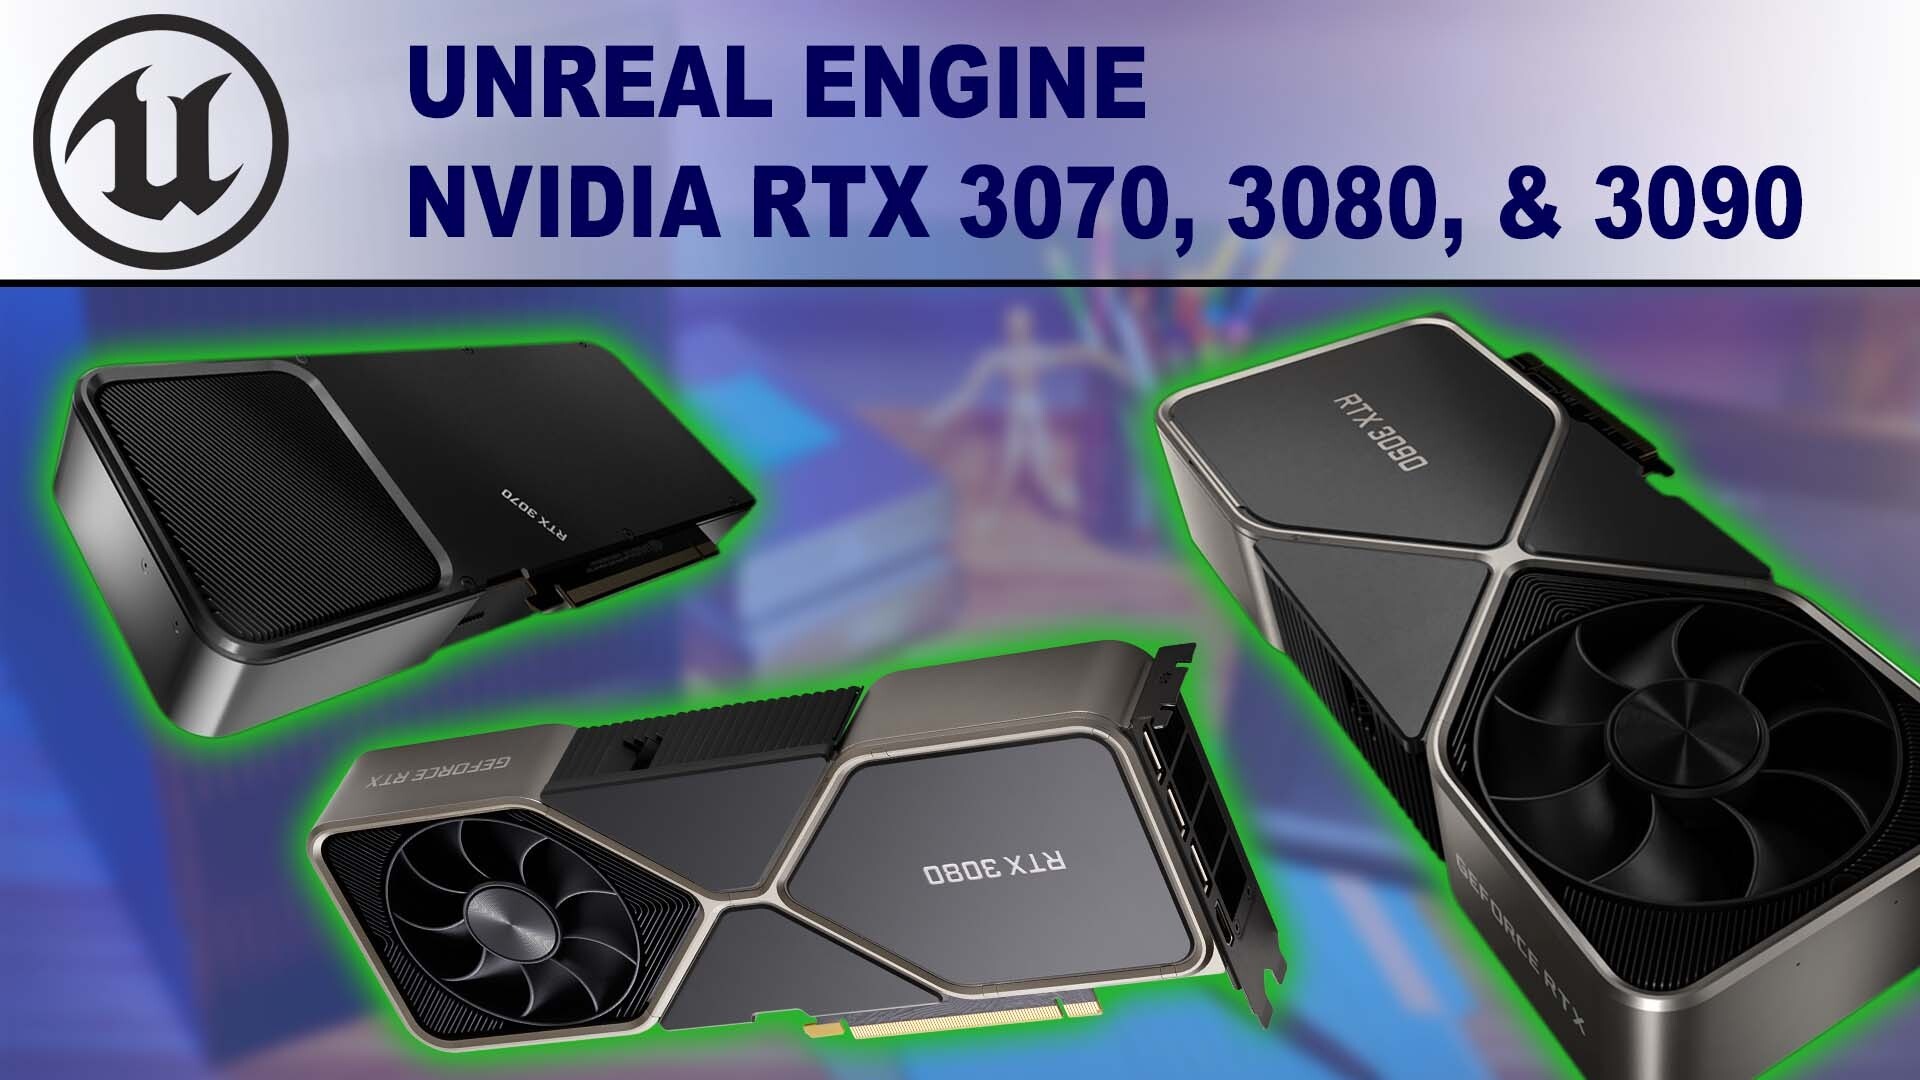 Unreal Engine Performance Benchmark - NVIDIA GeForce RTX 3080 10GB and NVIDIA GeForce RTX 3090 24GB